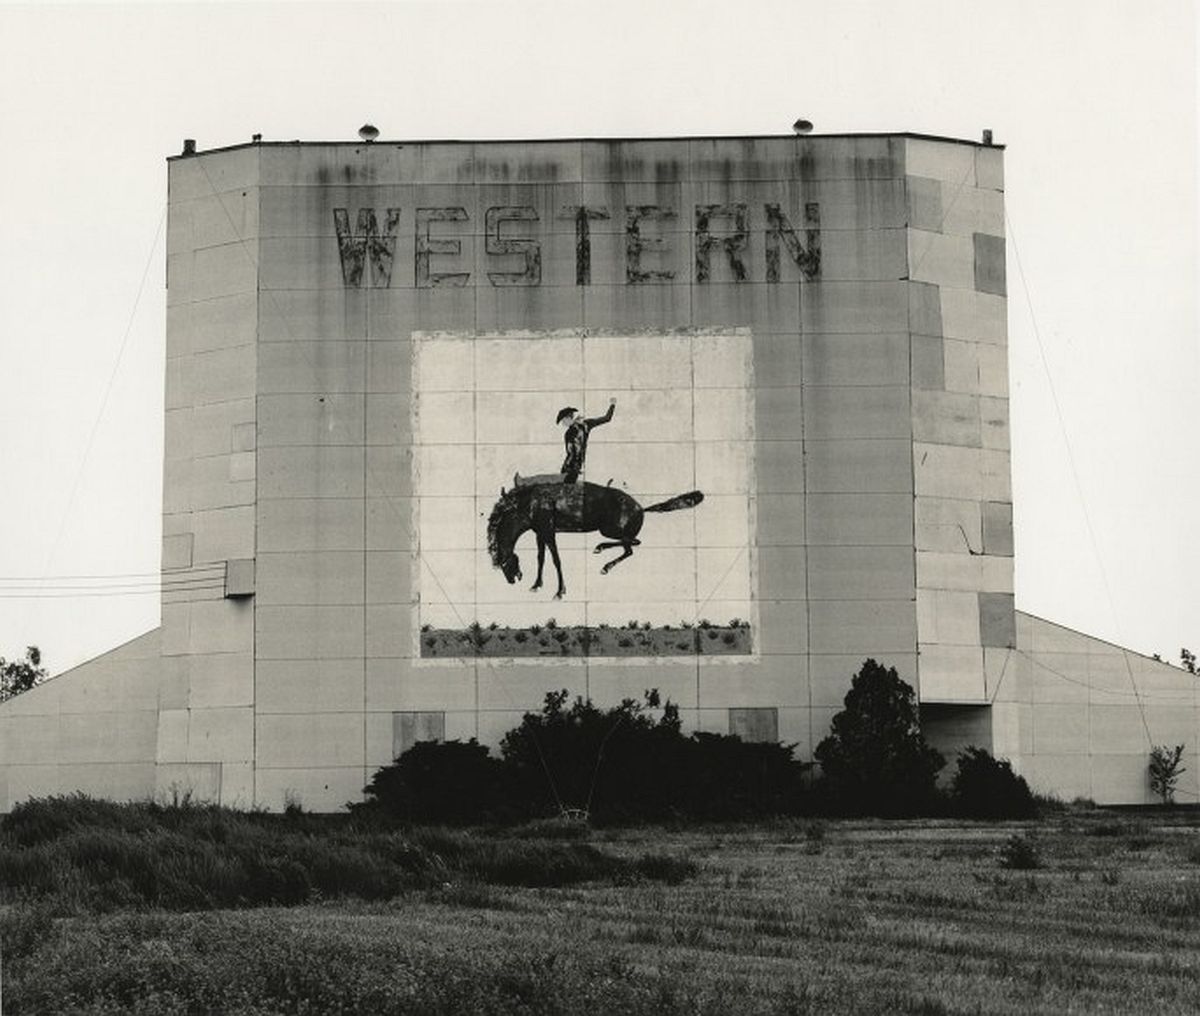 Drive-in Theater, Highway I-90, Chamberlain, South Dakota1973